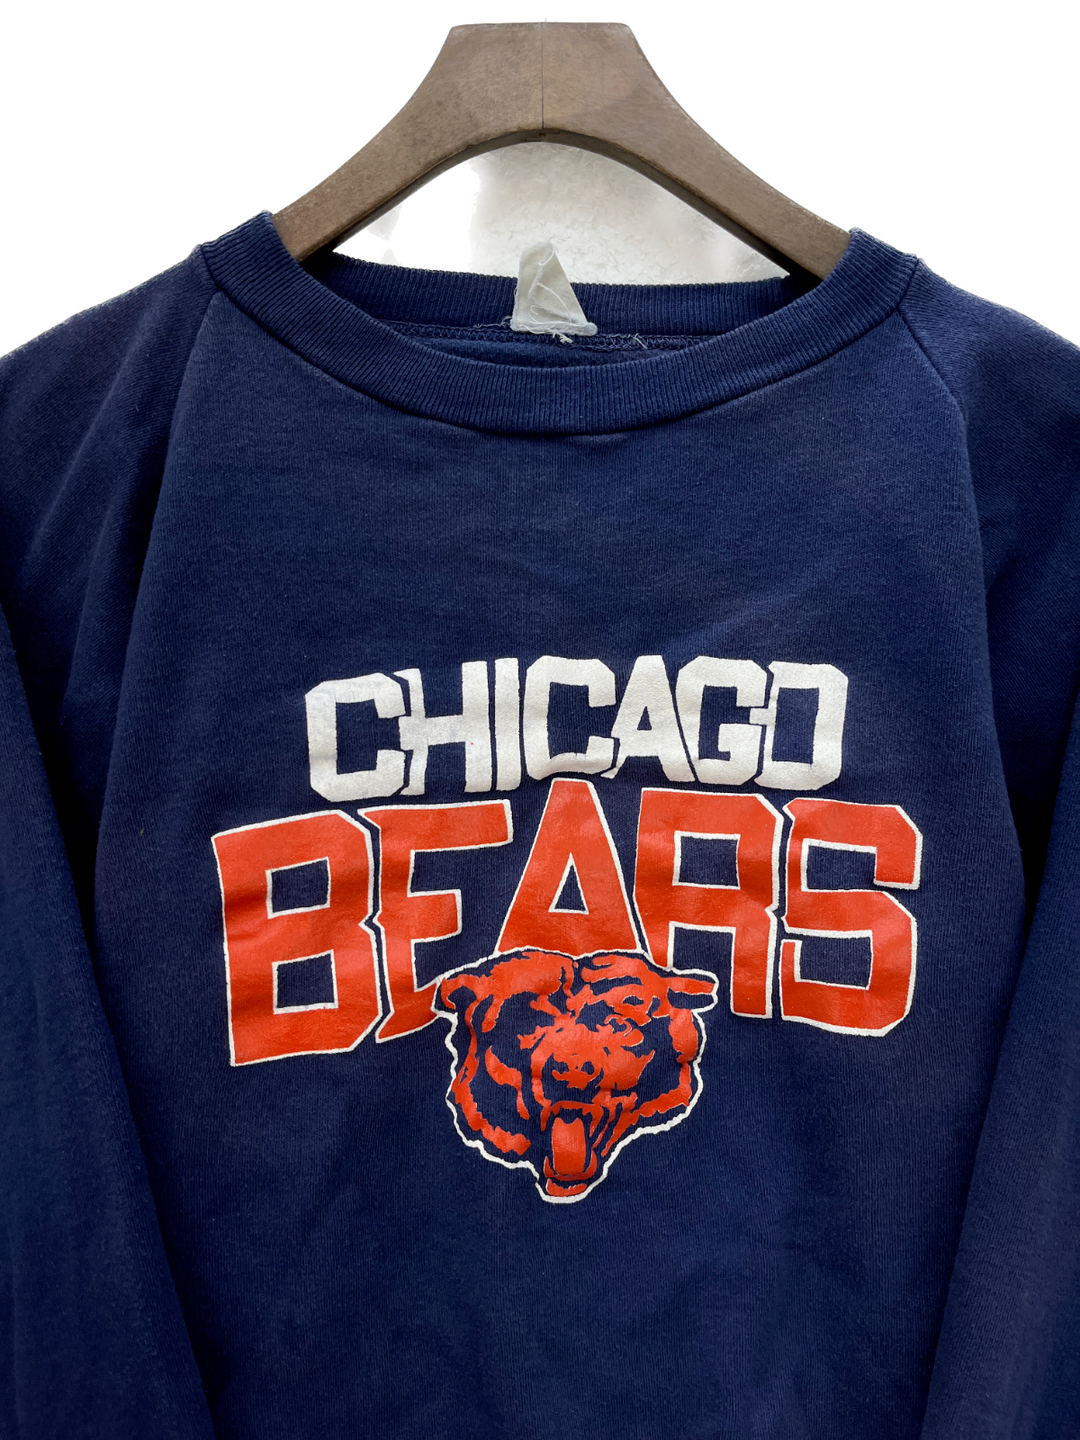 Chicago Bears Vintage Football Sweatshirt Youth Size L Blue Crewneck NFL 80s